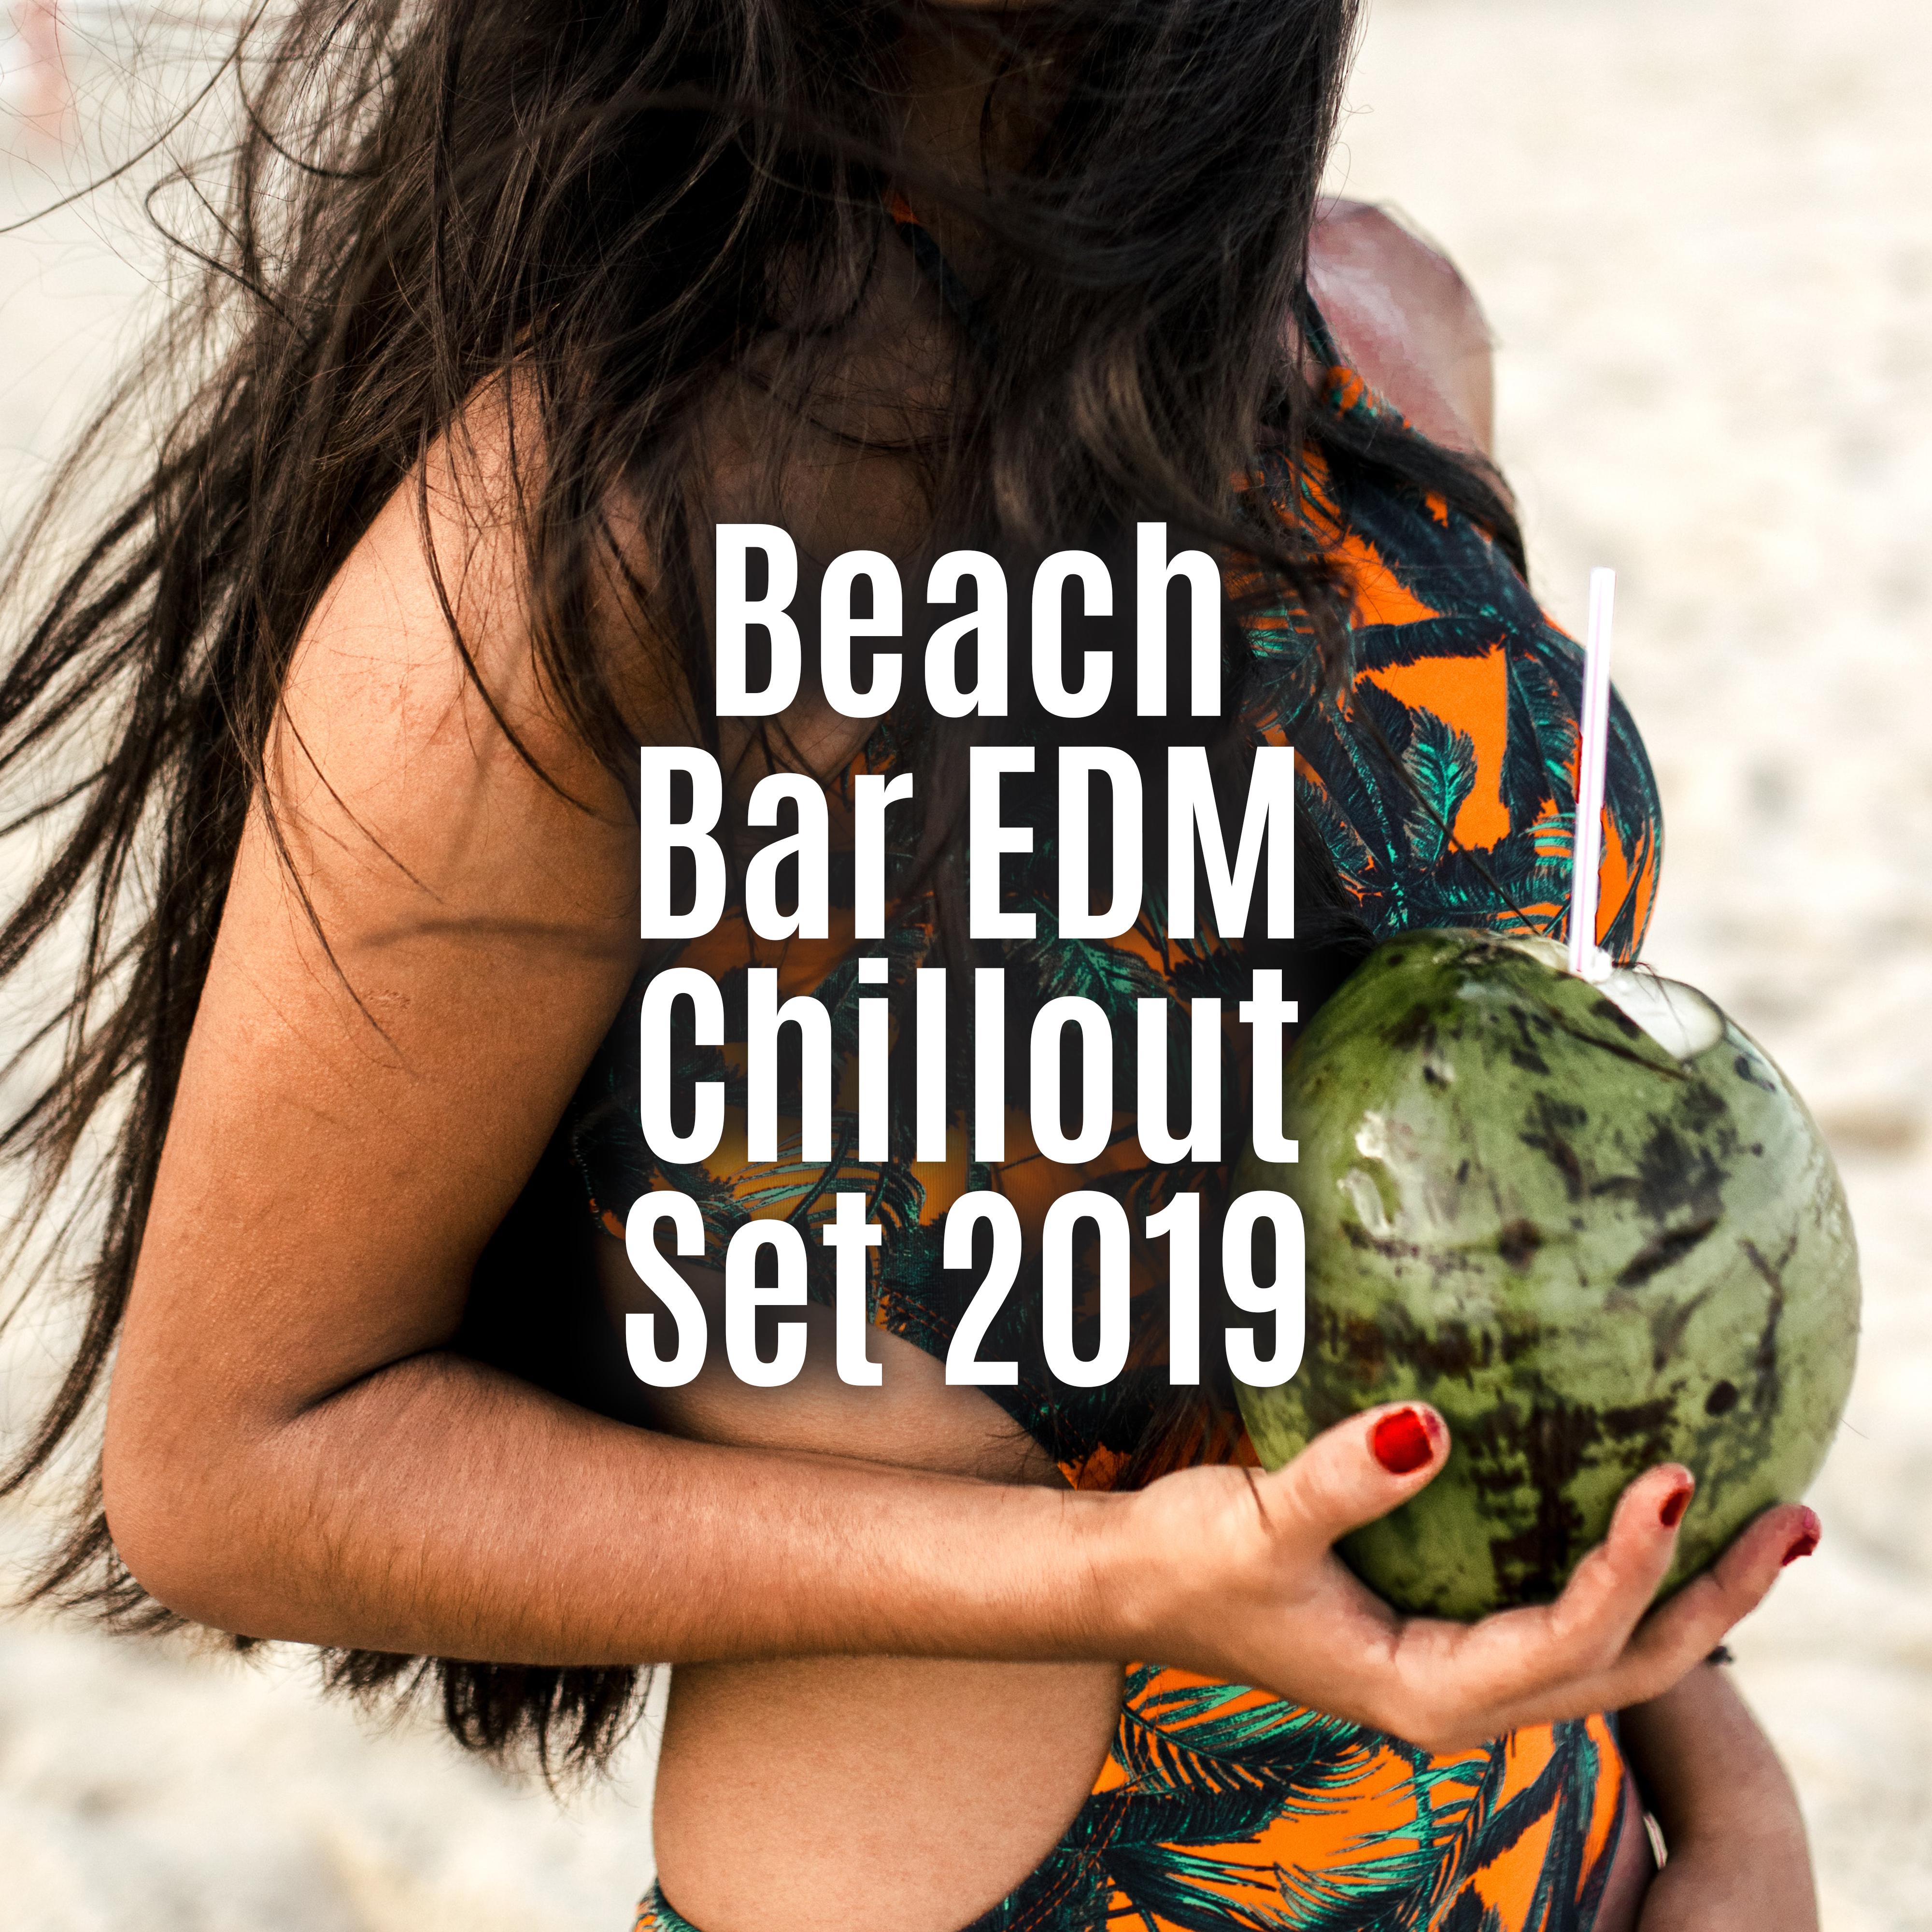 Beach Bar EDM Chillout Set 2019